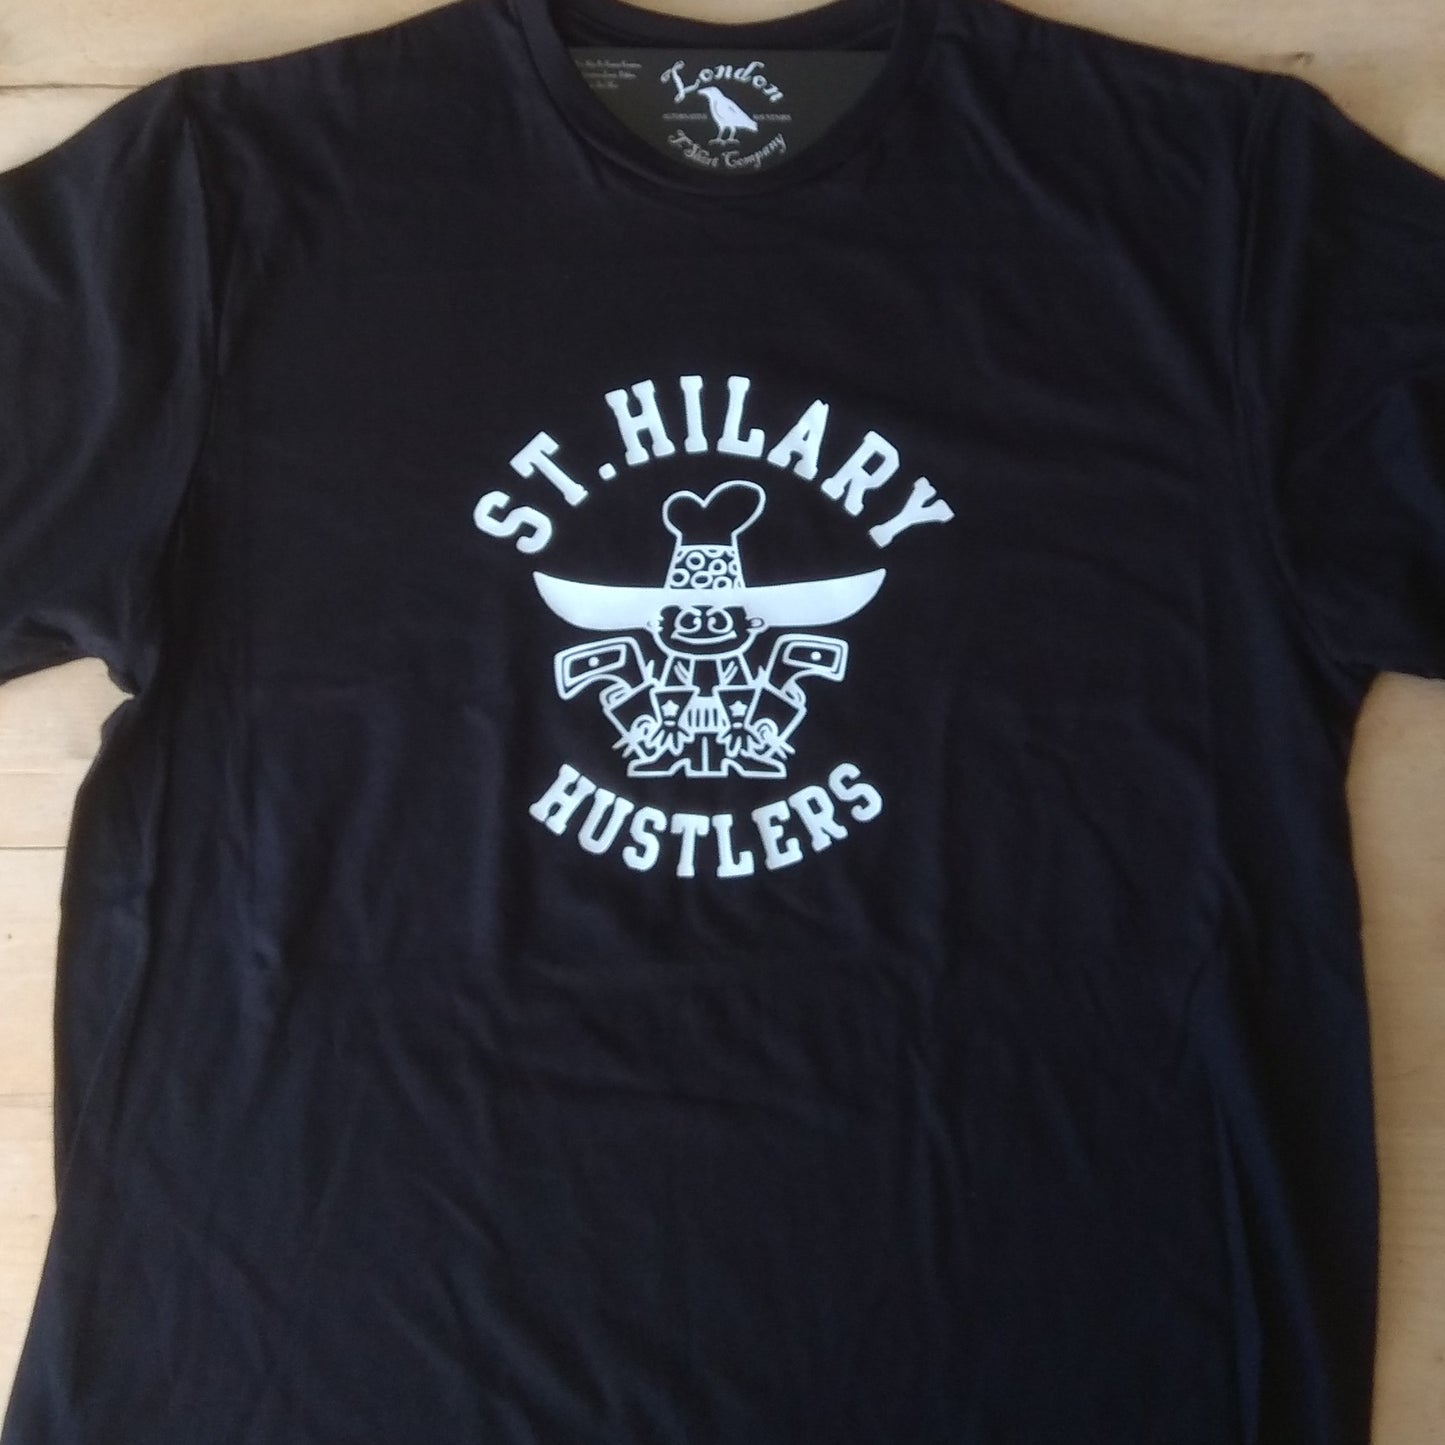 St Hilary Hustlers T-Shirt - Retro College Style, As Worn By Dee Dee Ramone, Punk Rock